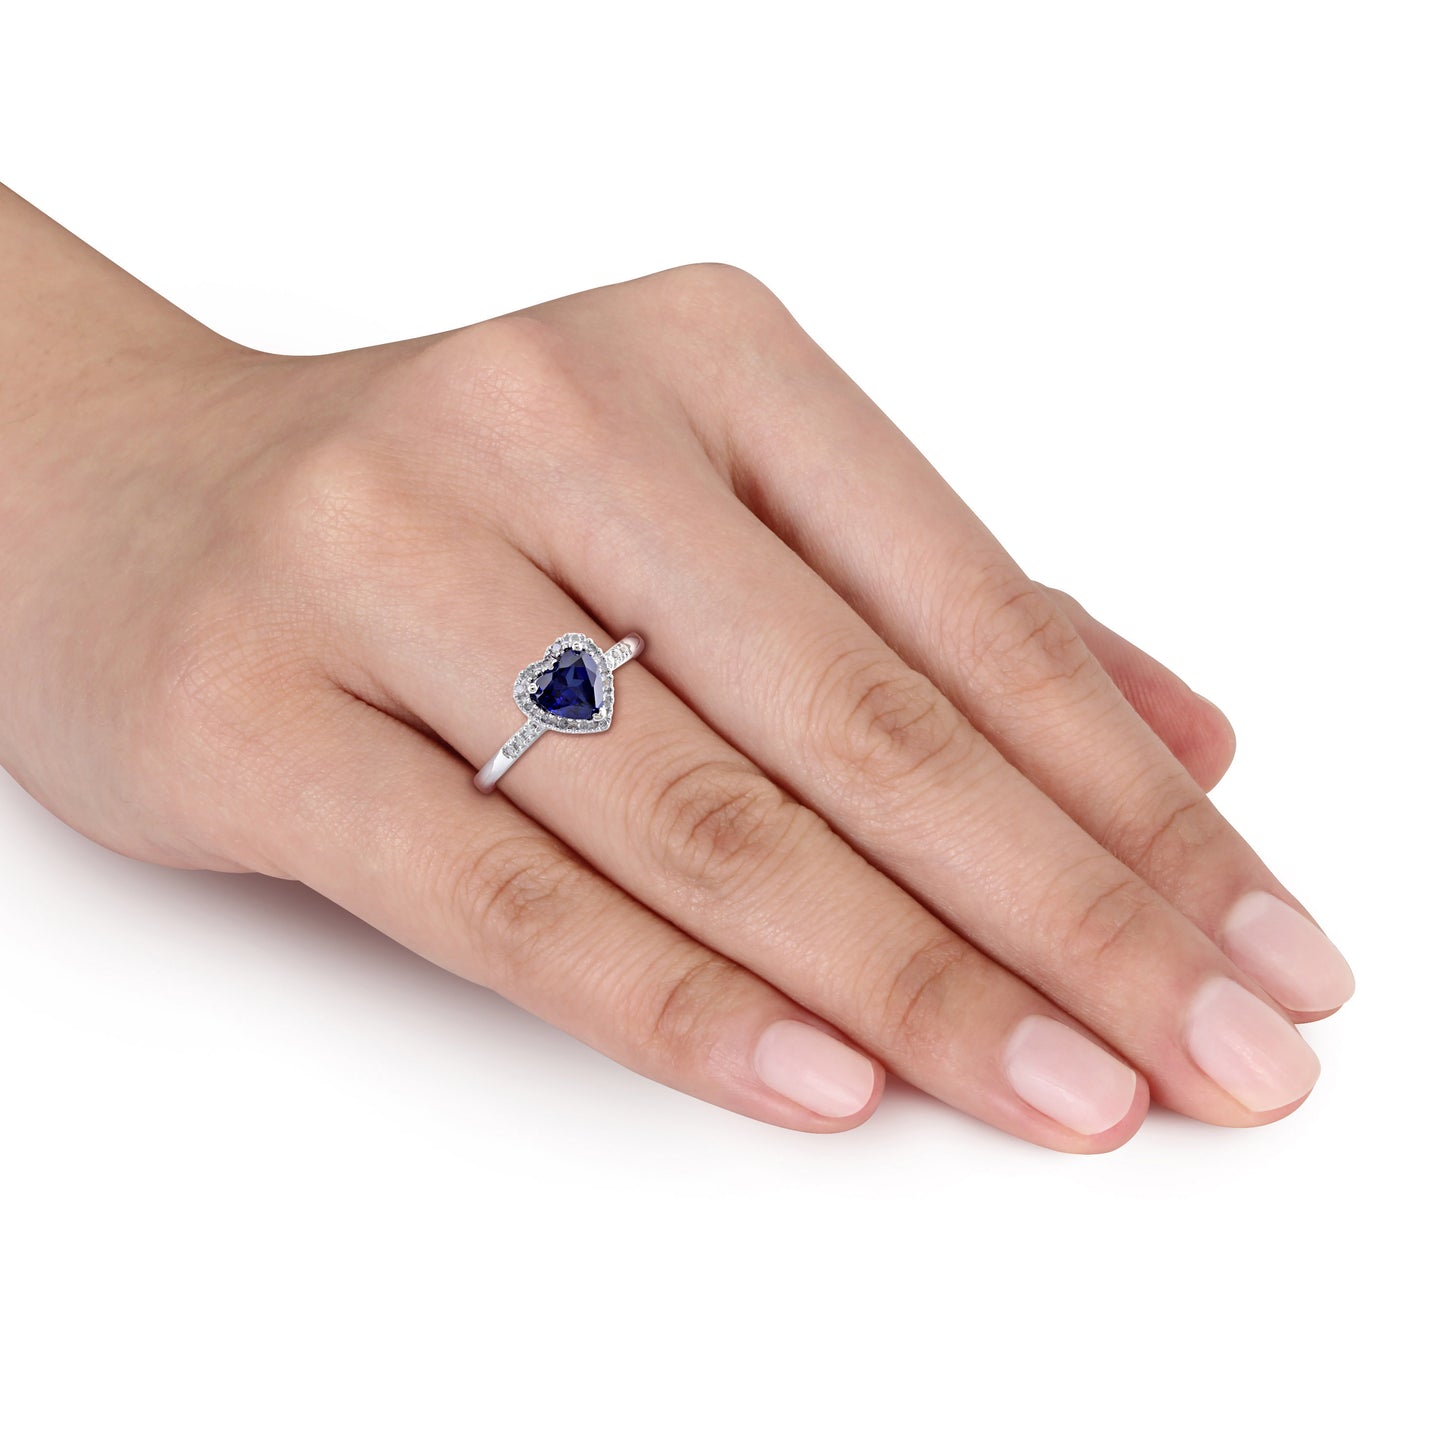 Heart Shaped Blue Sapphire & Diamond Hallo Ring in 10k White Gold